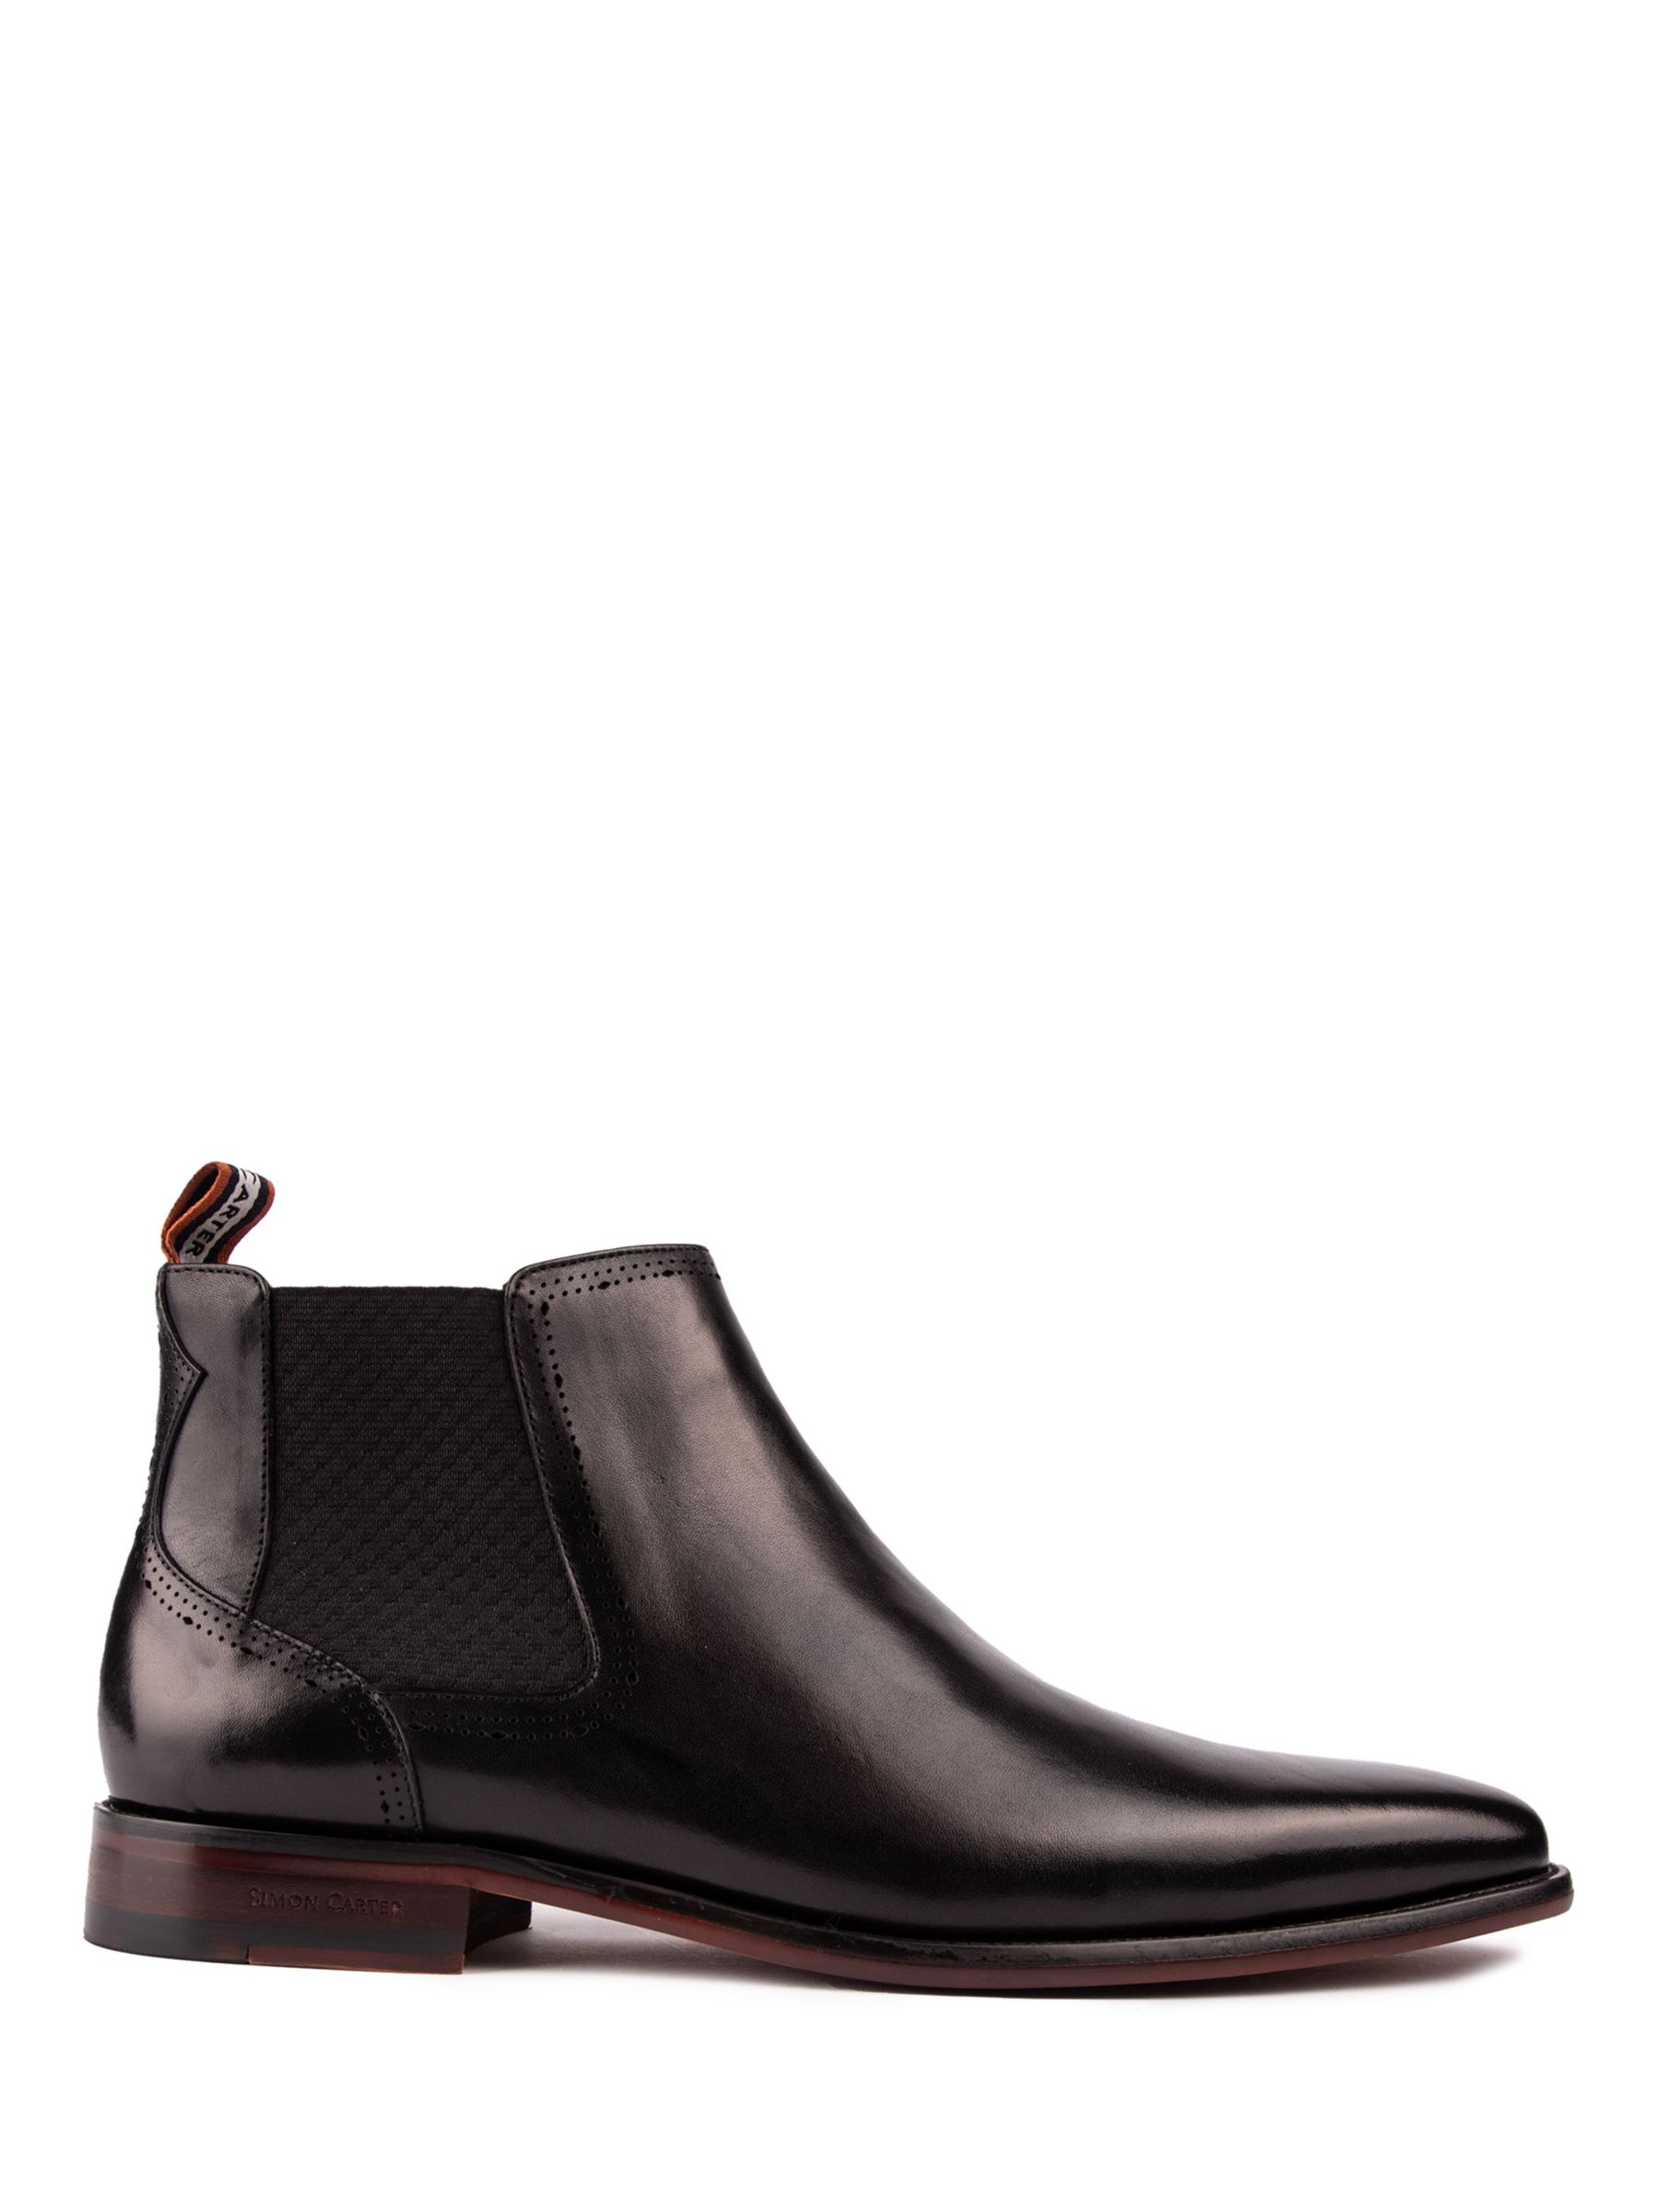 Simon Carter Astrex Leather Chelsea Boots, Black, 10